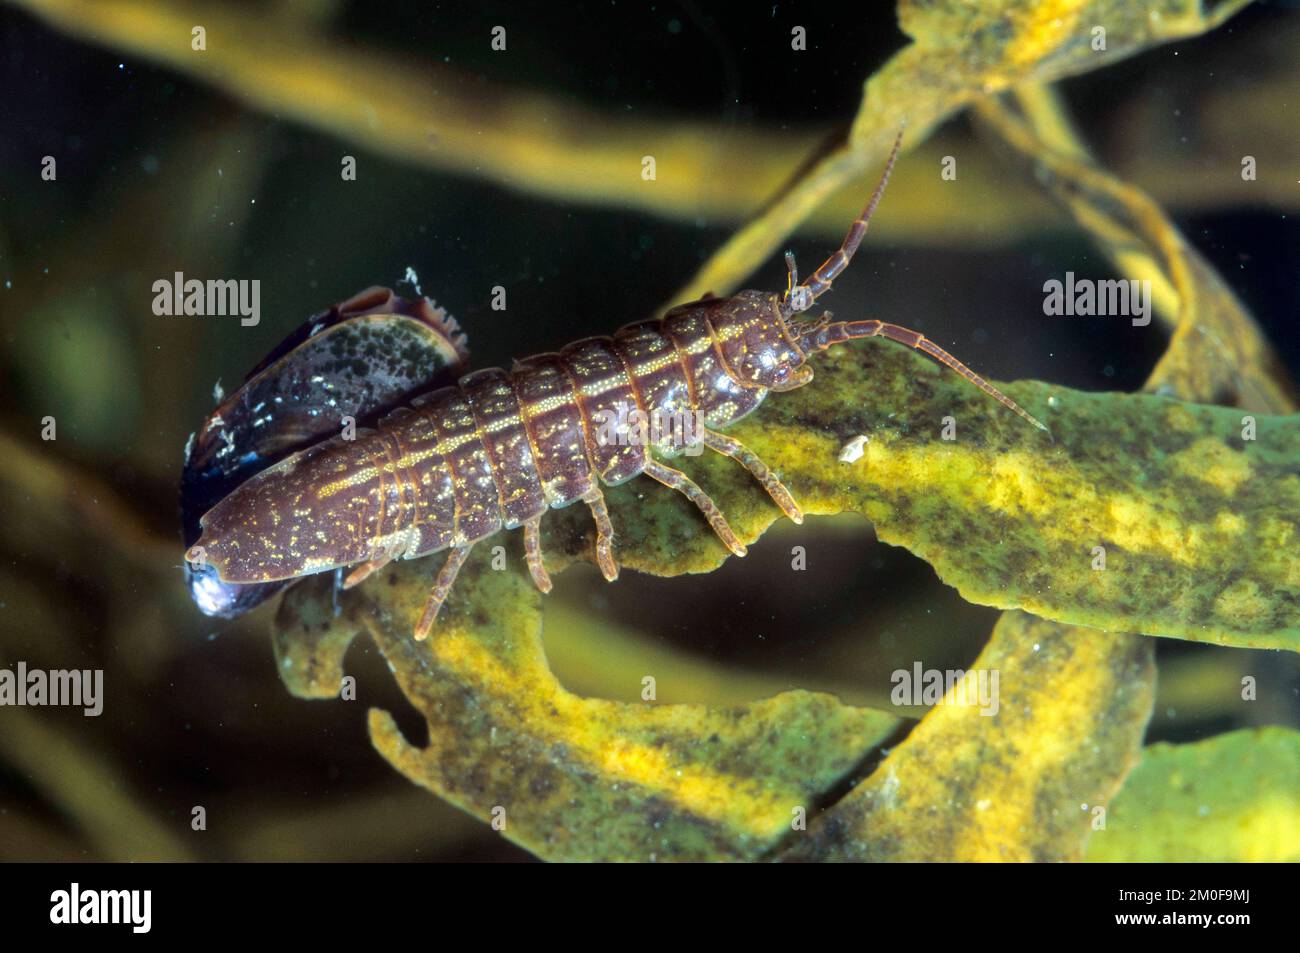 Baltic isopod, Baltic sea centipede (Idotea balthica), on algae, Germany Stock Photo